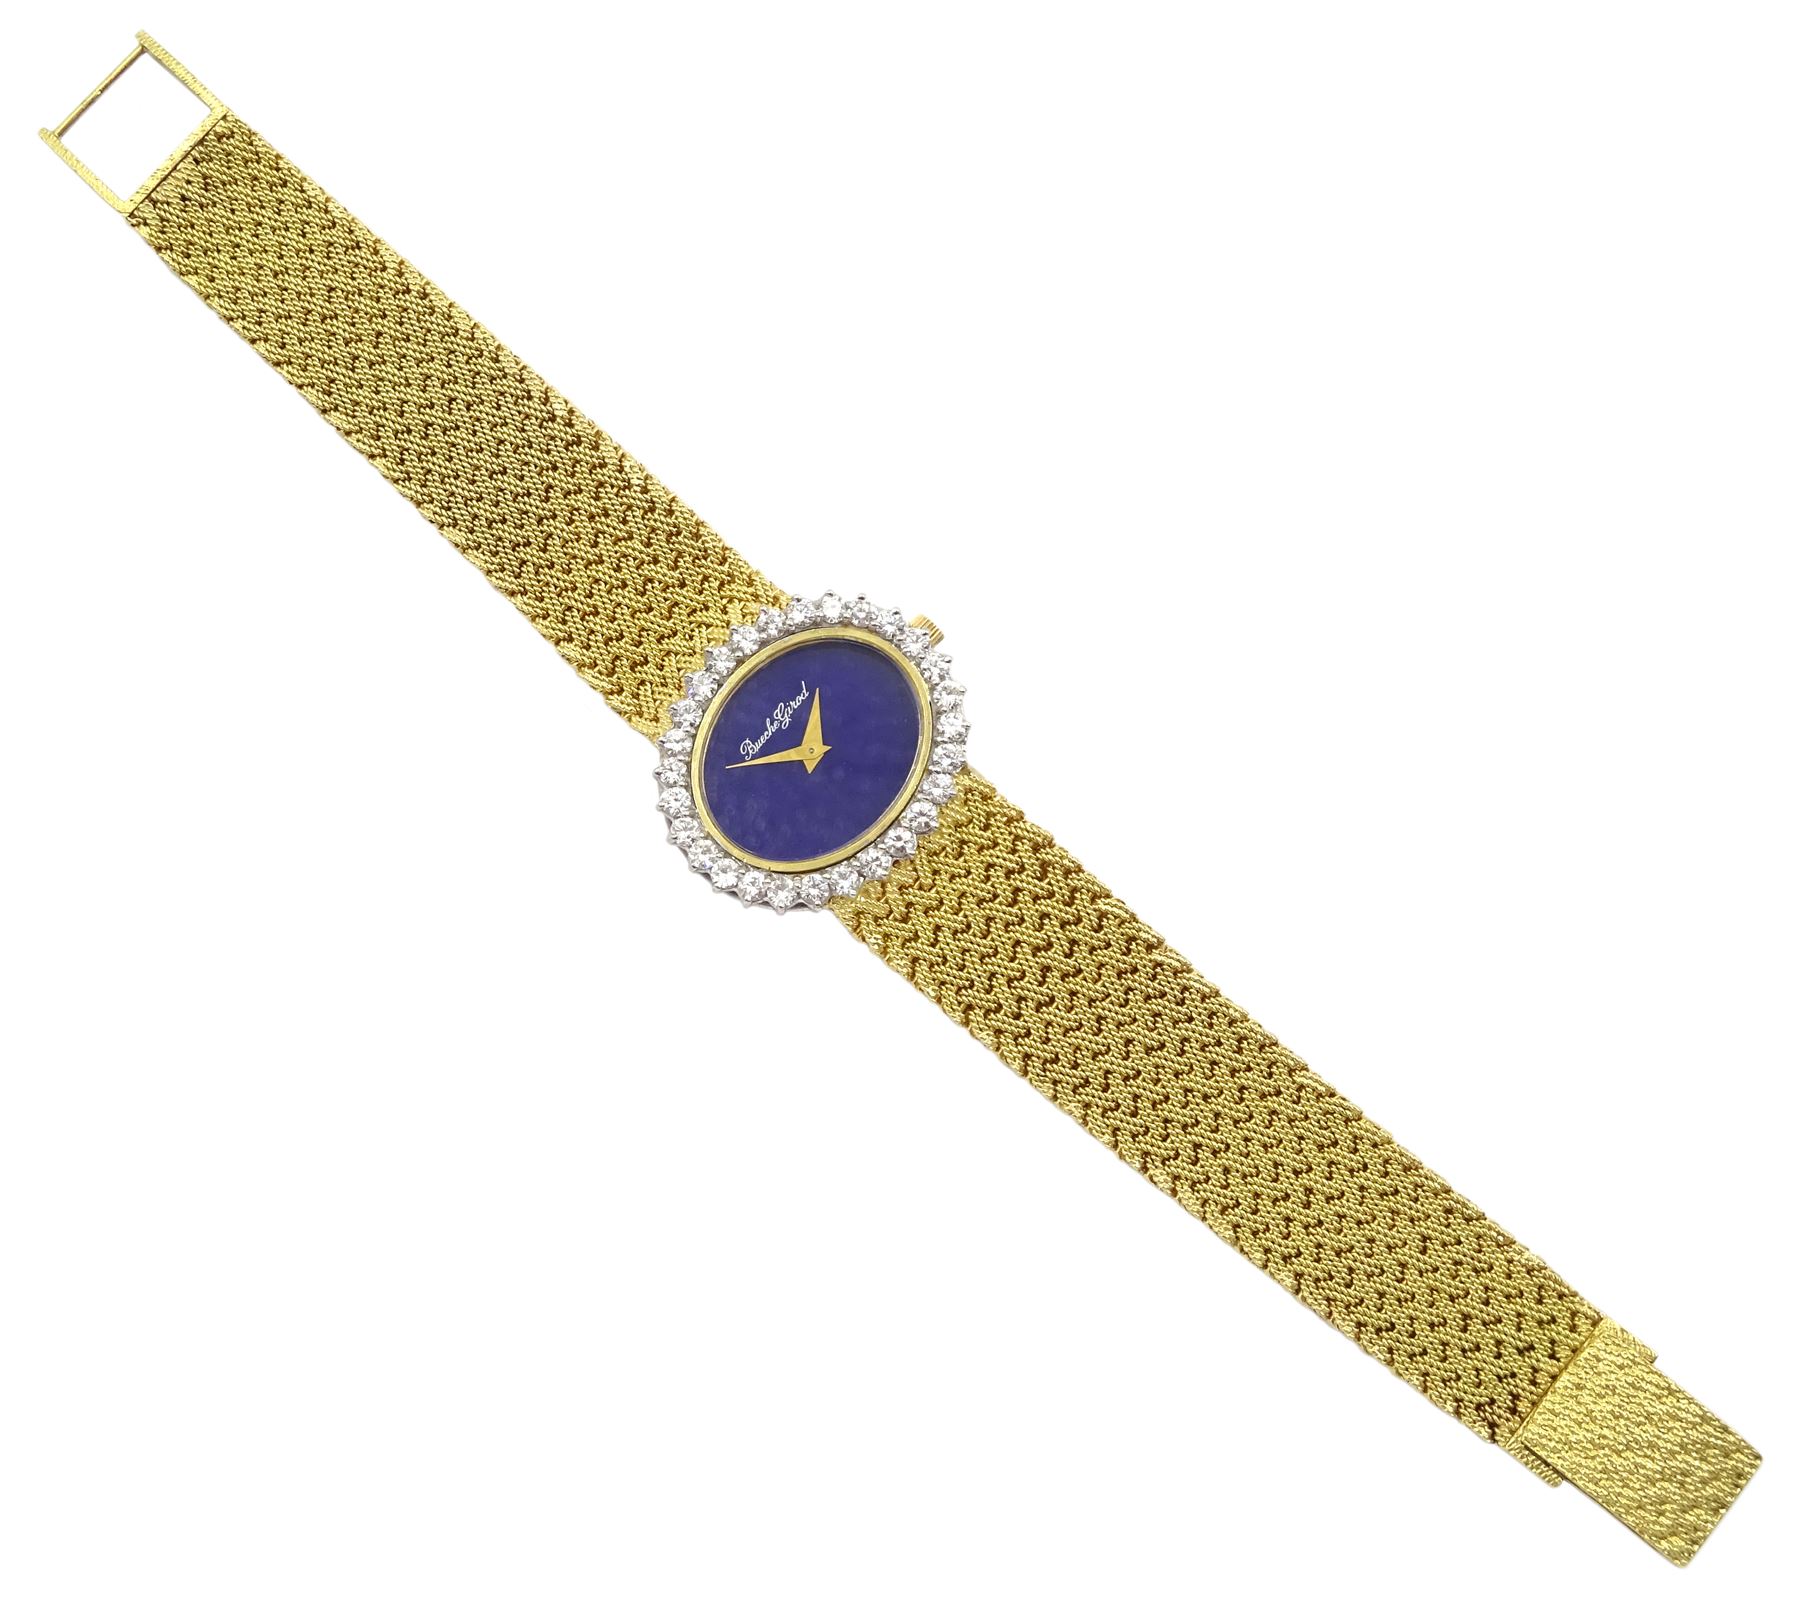 Bueche Girod ladies 18ct gold manual wind wristwatch - Image 2 of 4